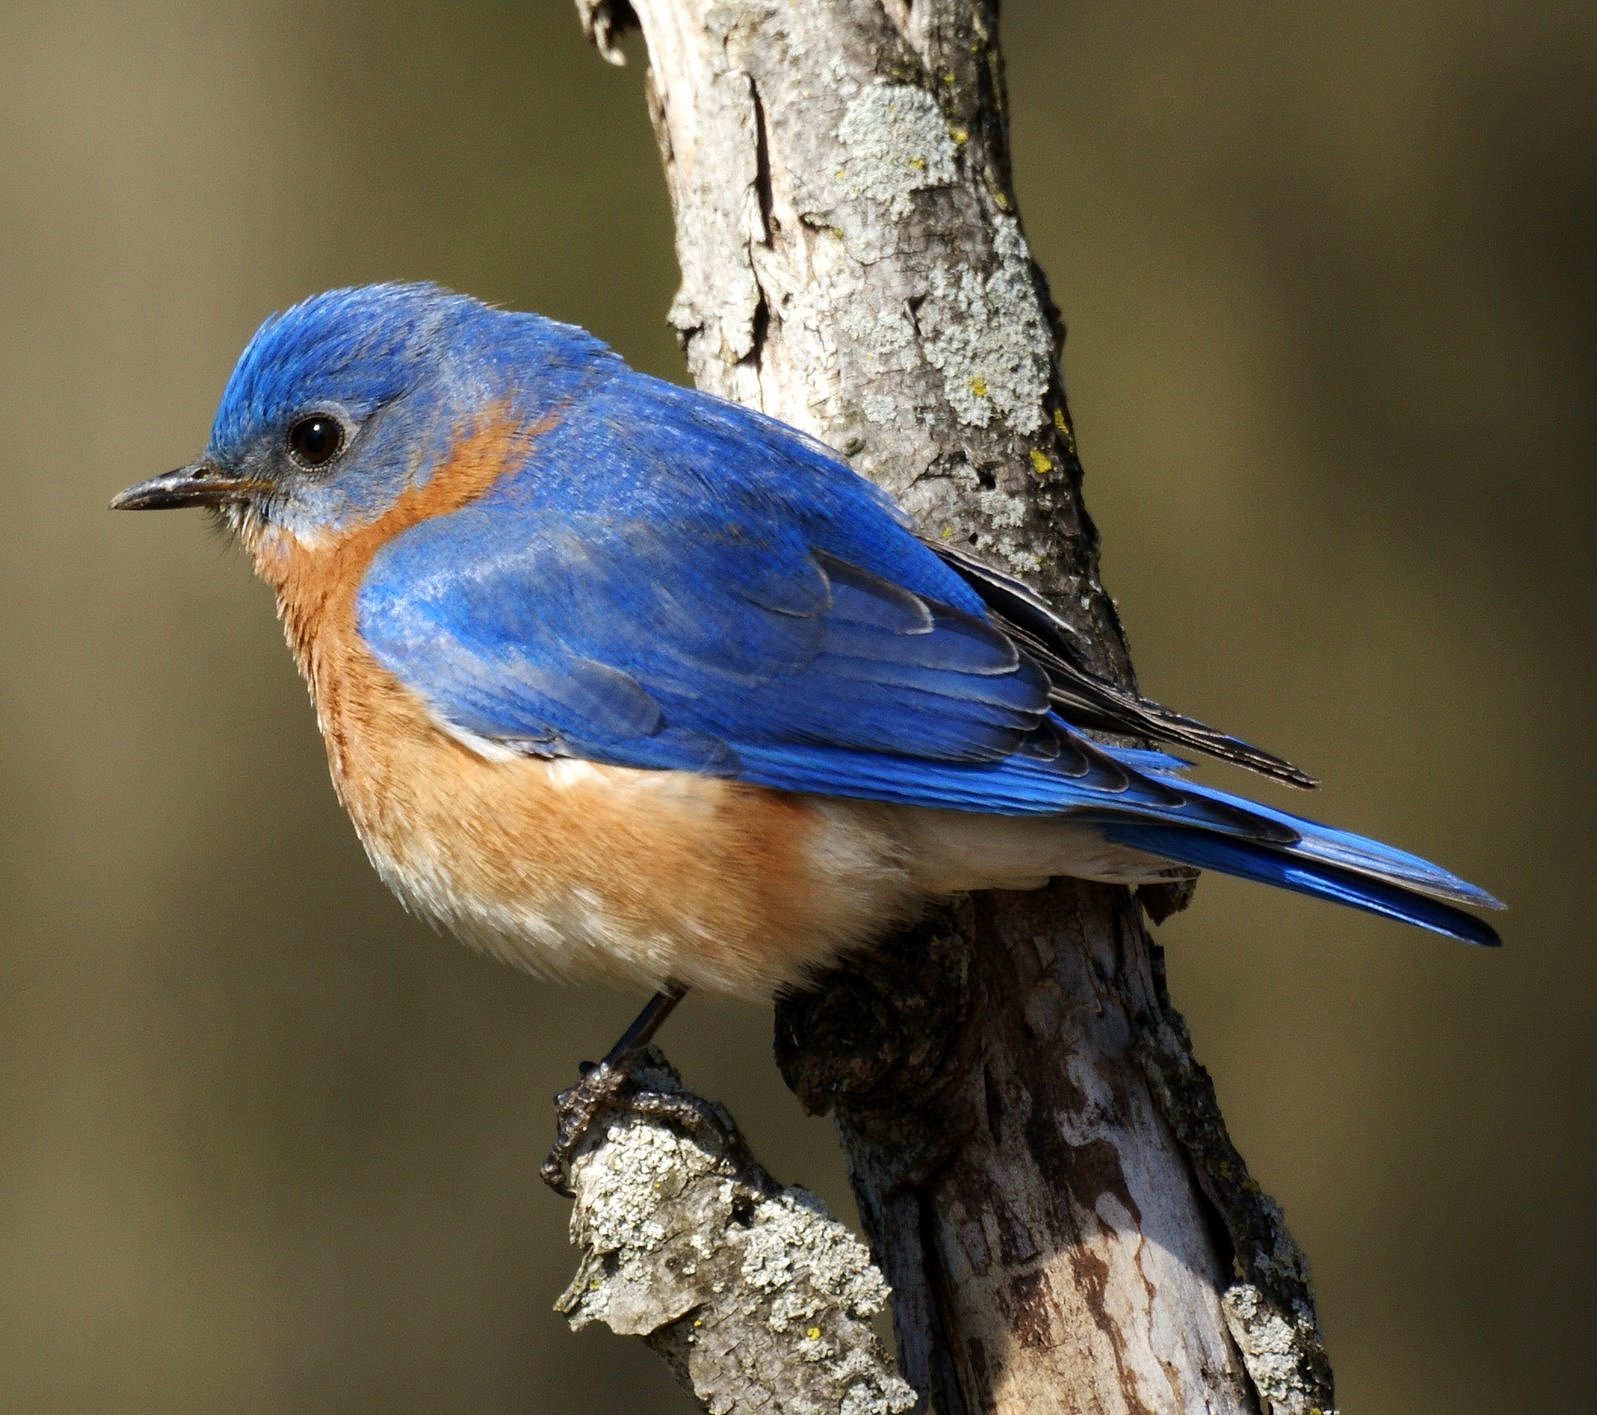 Birds of the World: Eastern bluebird